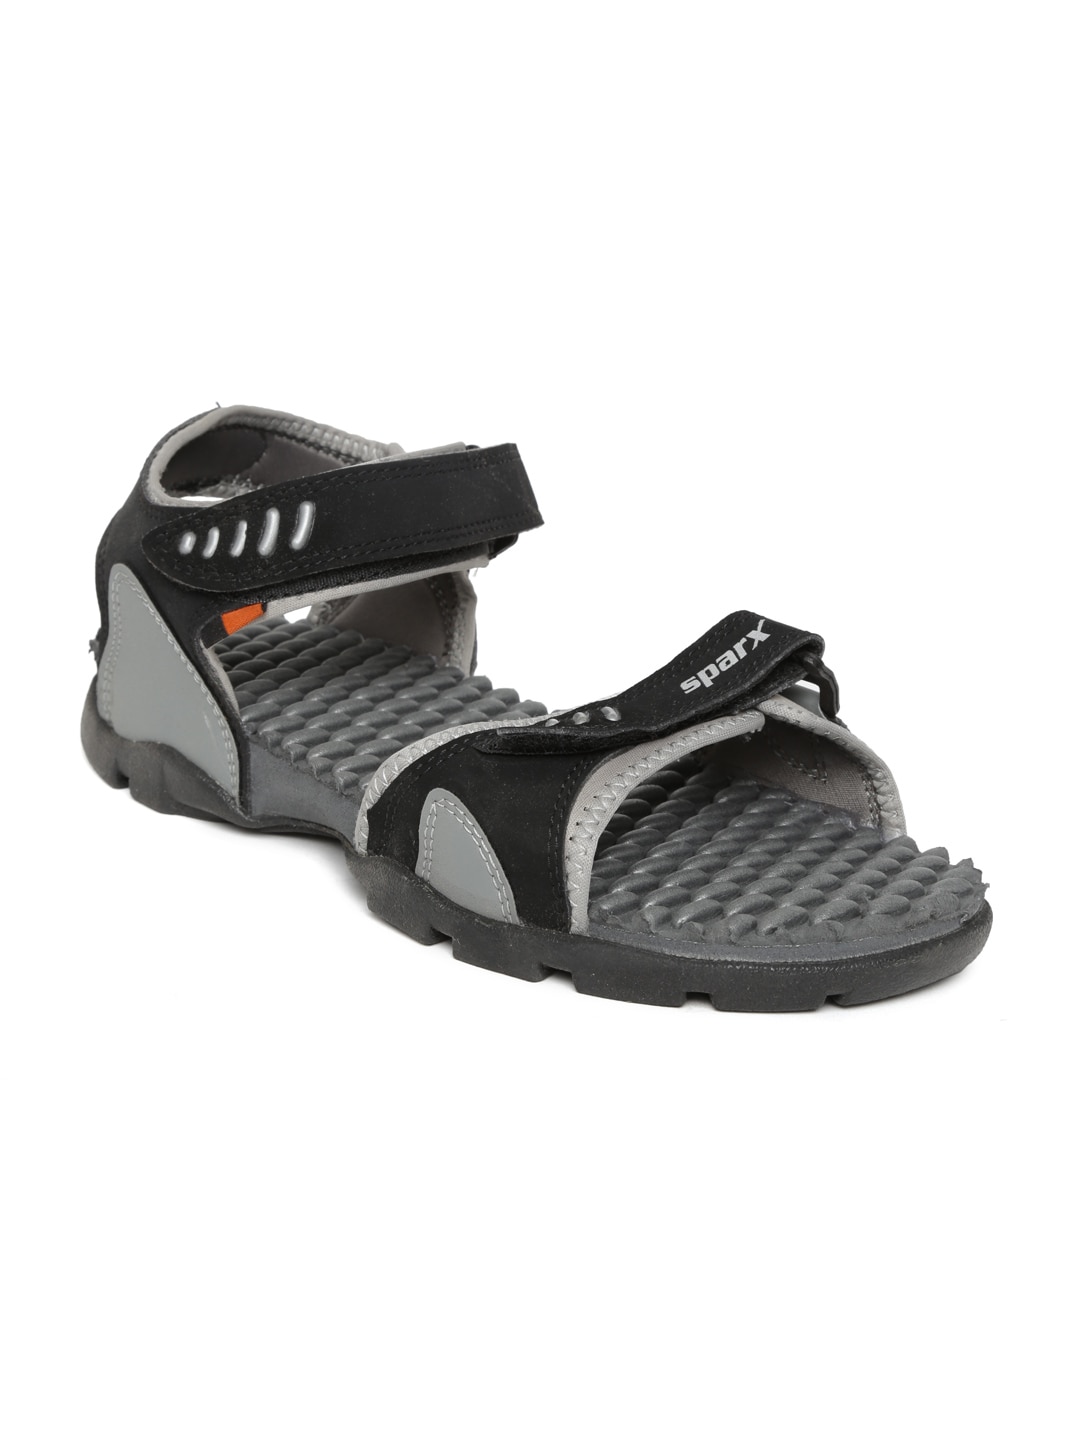 Buy Sparx Men Grey & Black Sports Sandals - 449 - Footwear for Men - 214724